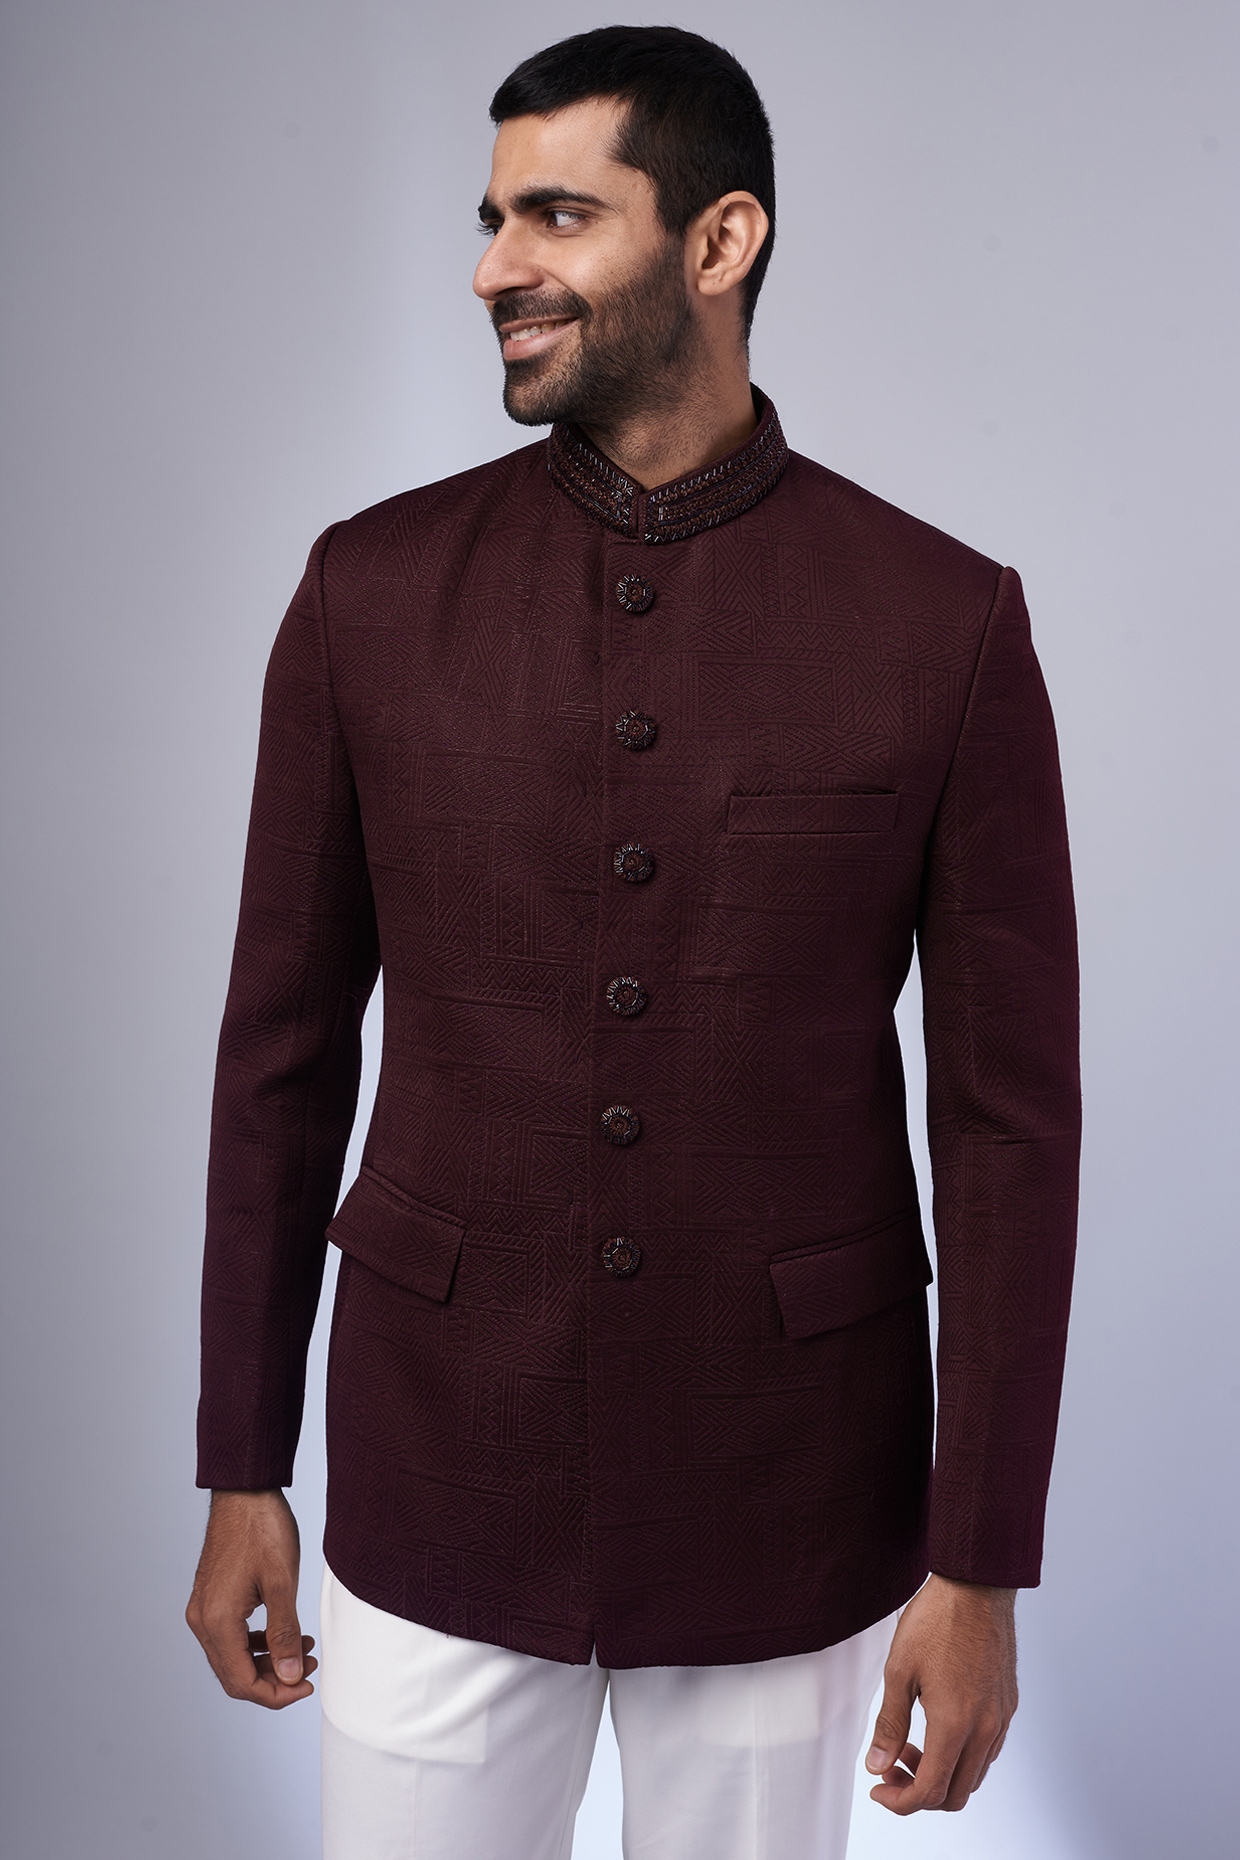 Jodhpuri Suits,Man Suits Jodhpuri Dress For Men Coats Jackets Vests Velvet  Suit | eBay